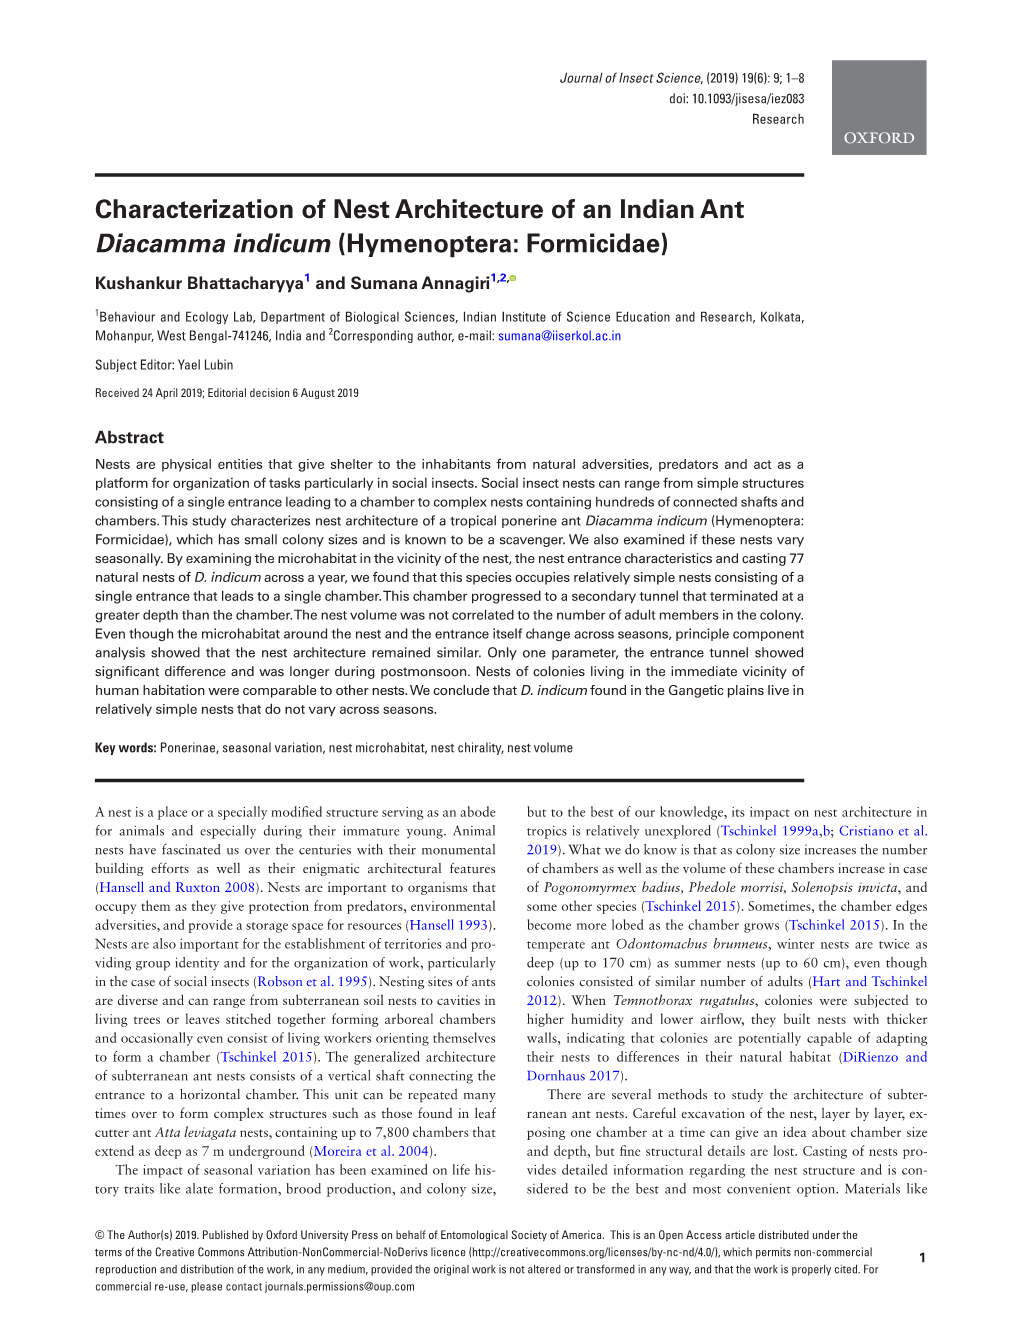 Characterization of Nest Architecture of an Indian Ant Diacamma Indicum (Hymenoptera: Formicidae) Kushankur Bhattacharyya1 and Sumana Annagiri1,2